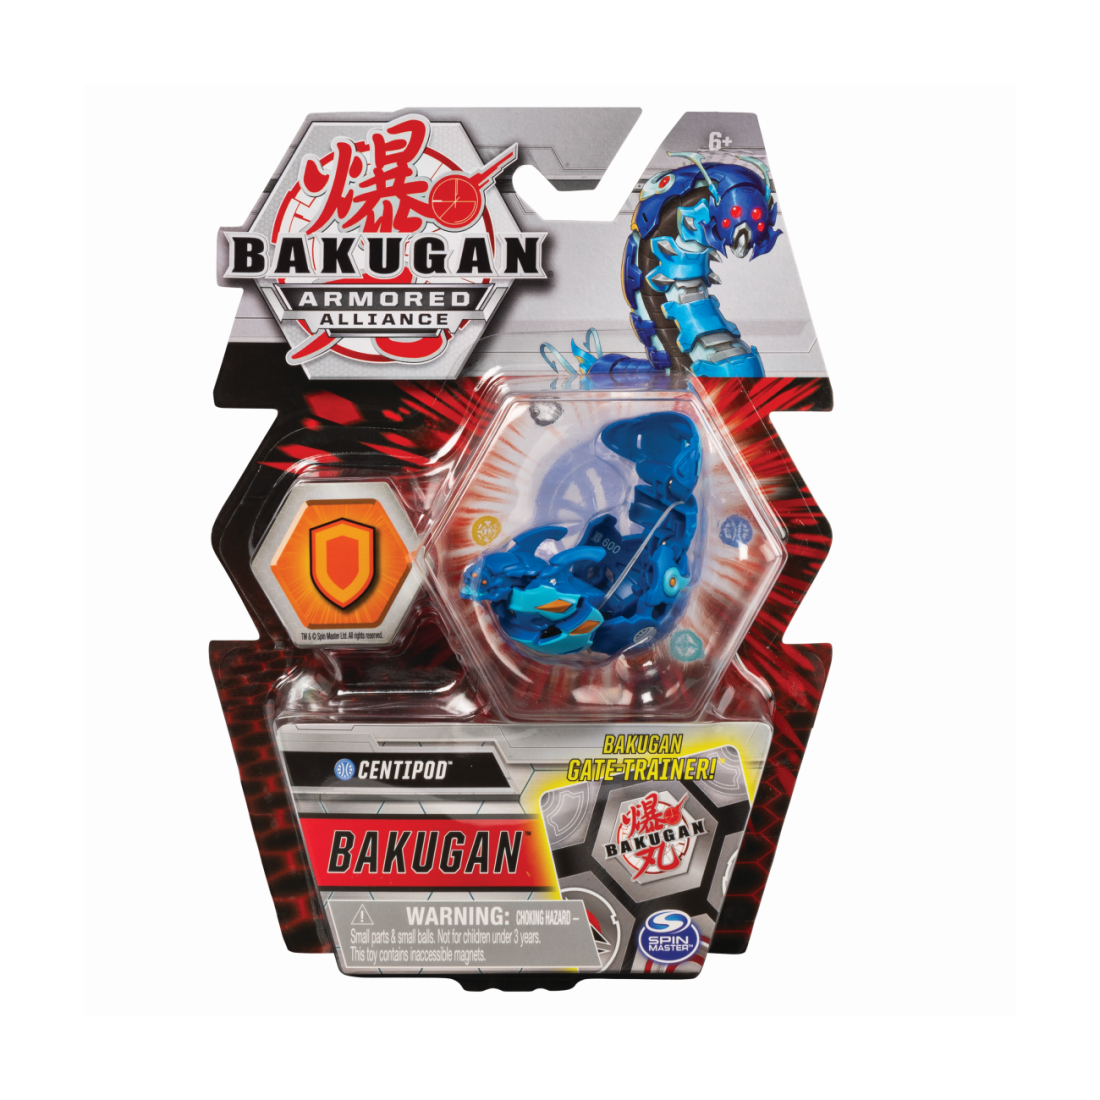 Spin Master Bakugan Armored Alliance - Gate Trainer - Centipod Core Ball